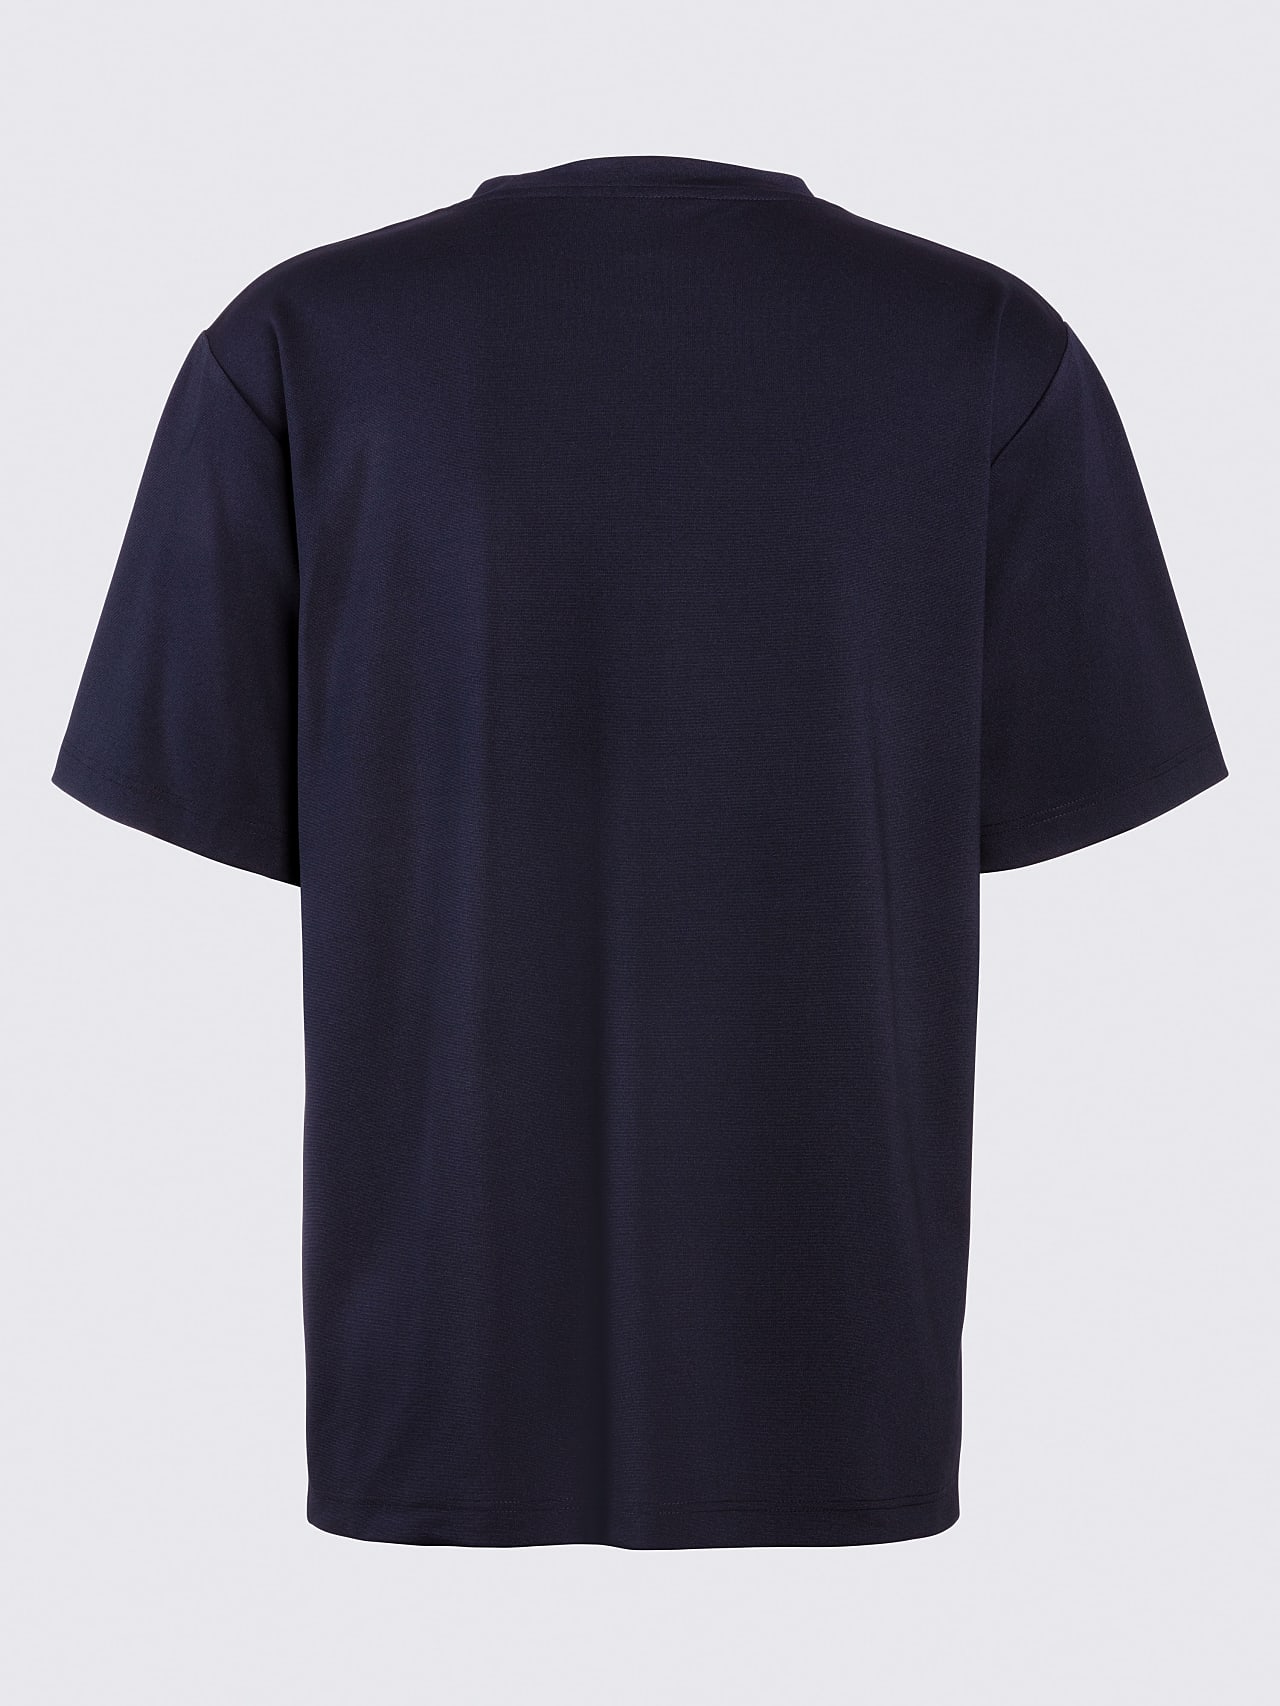 AlphaTauri | JAHEV V1.Y5.02 | Relaxed Logo T-Shirt in navy / blue for Men